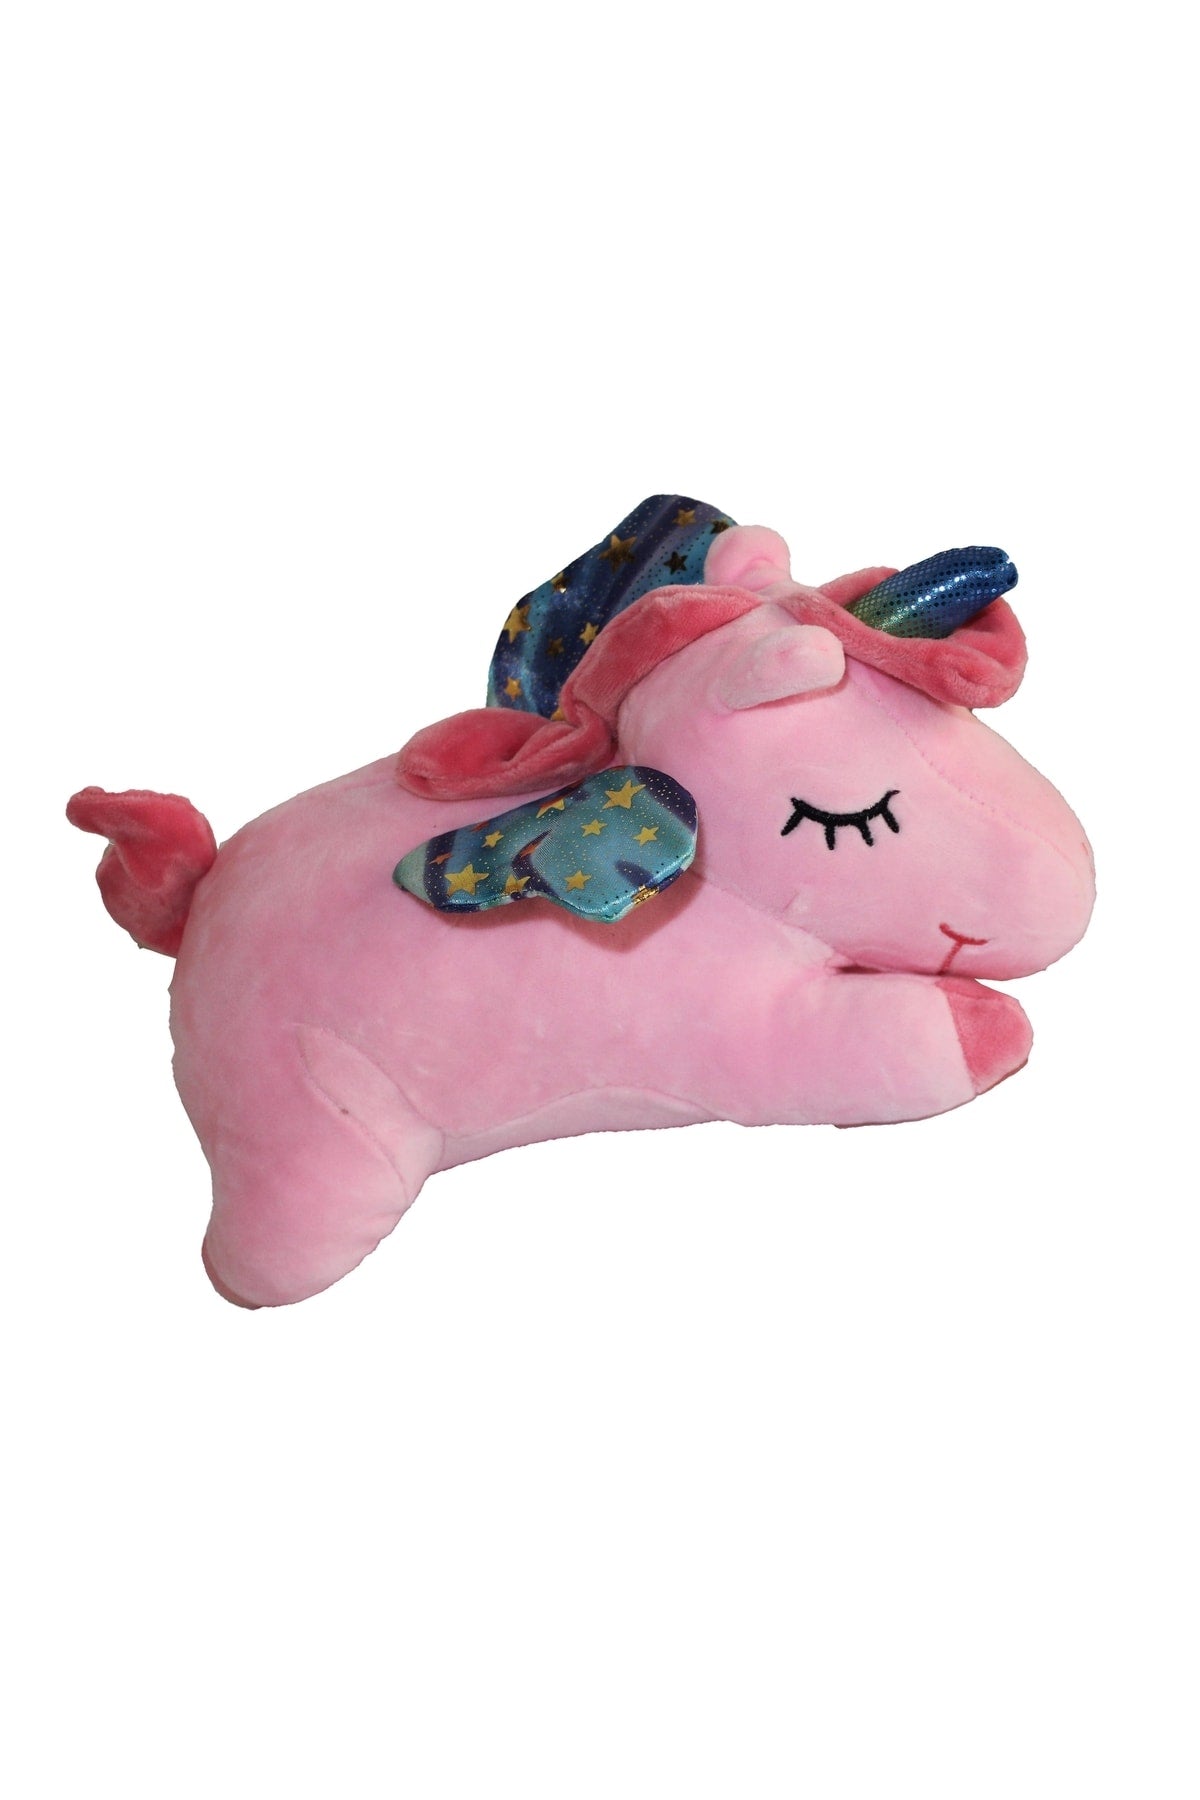 Imported Fabric Cute Star Wings Horned Unicorn Figure Plush Toy Play & Sleep Companion 28 Cm.